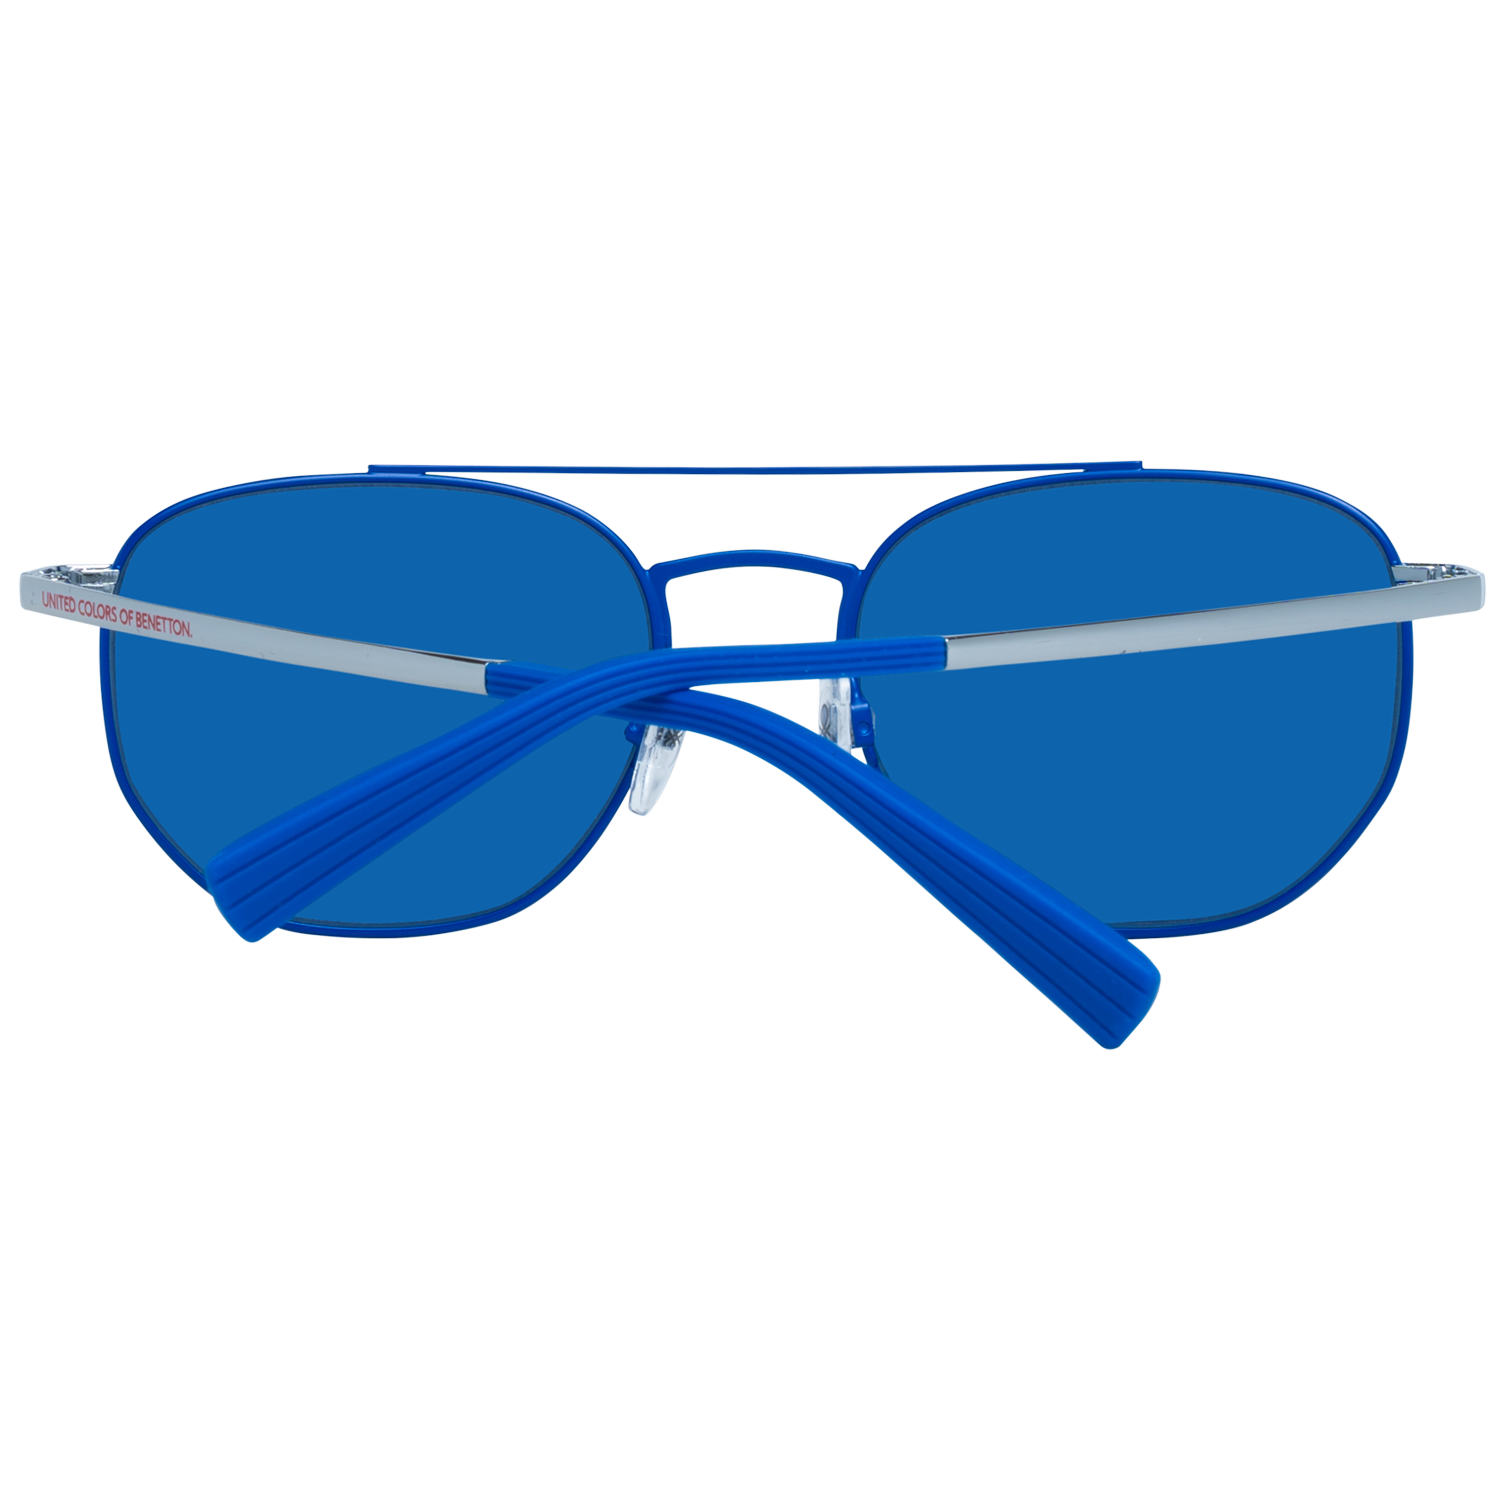 Benetton Sunglasses Benetton Sunglasses BE7014 686 54 Eyeglasses Eyewear UK USA Australia 